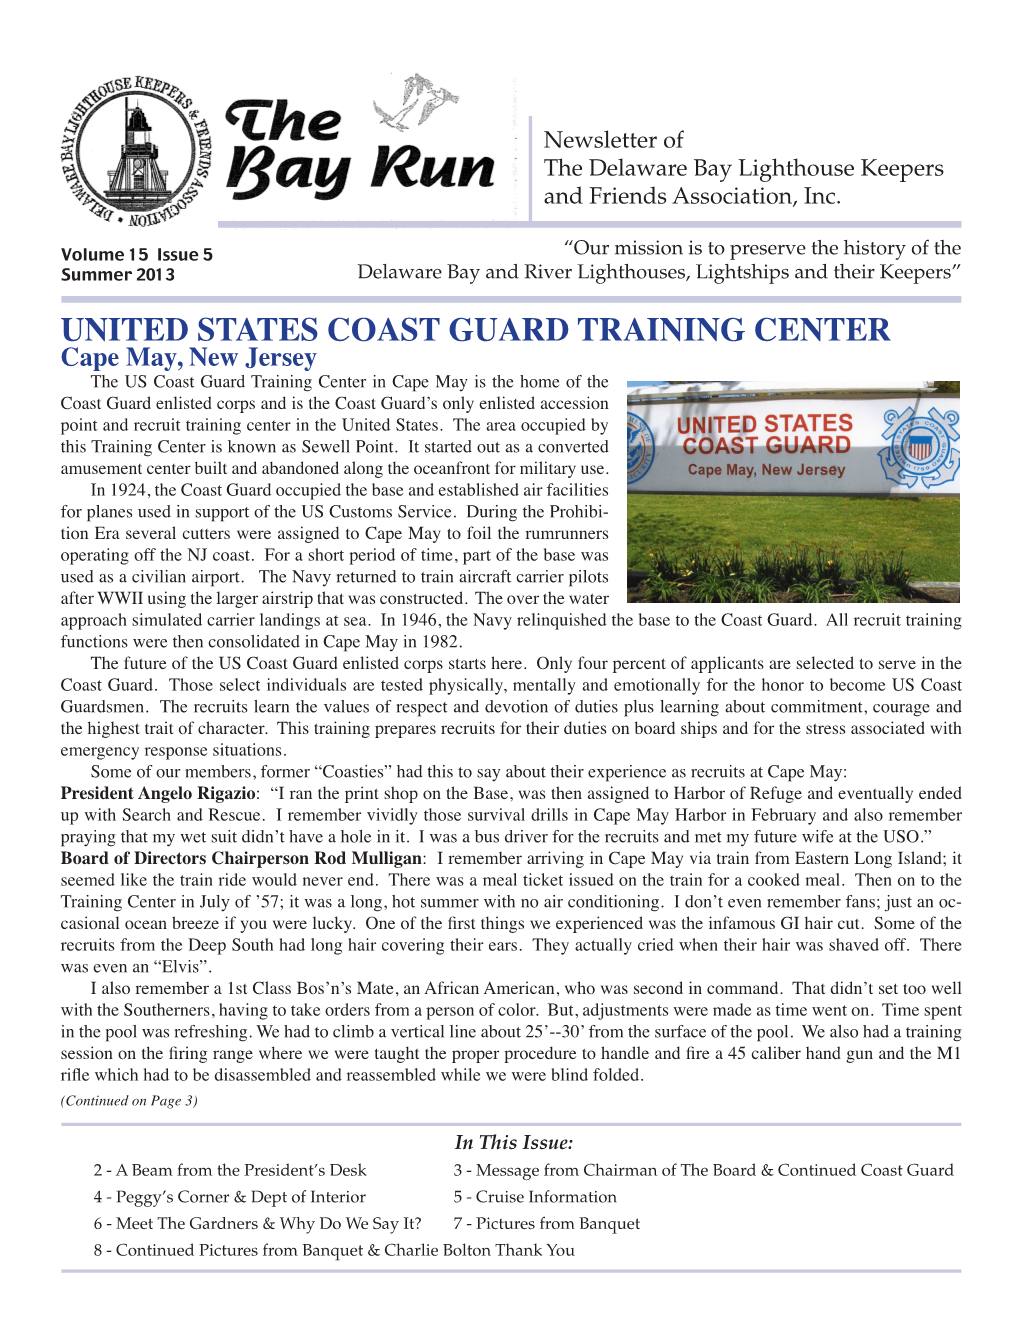 United States Coast Guard Training Center